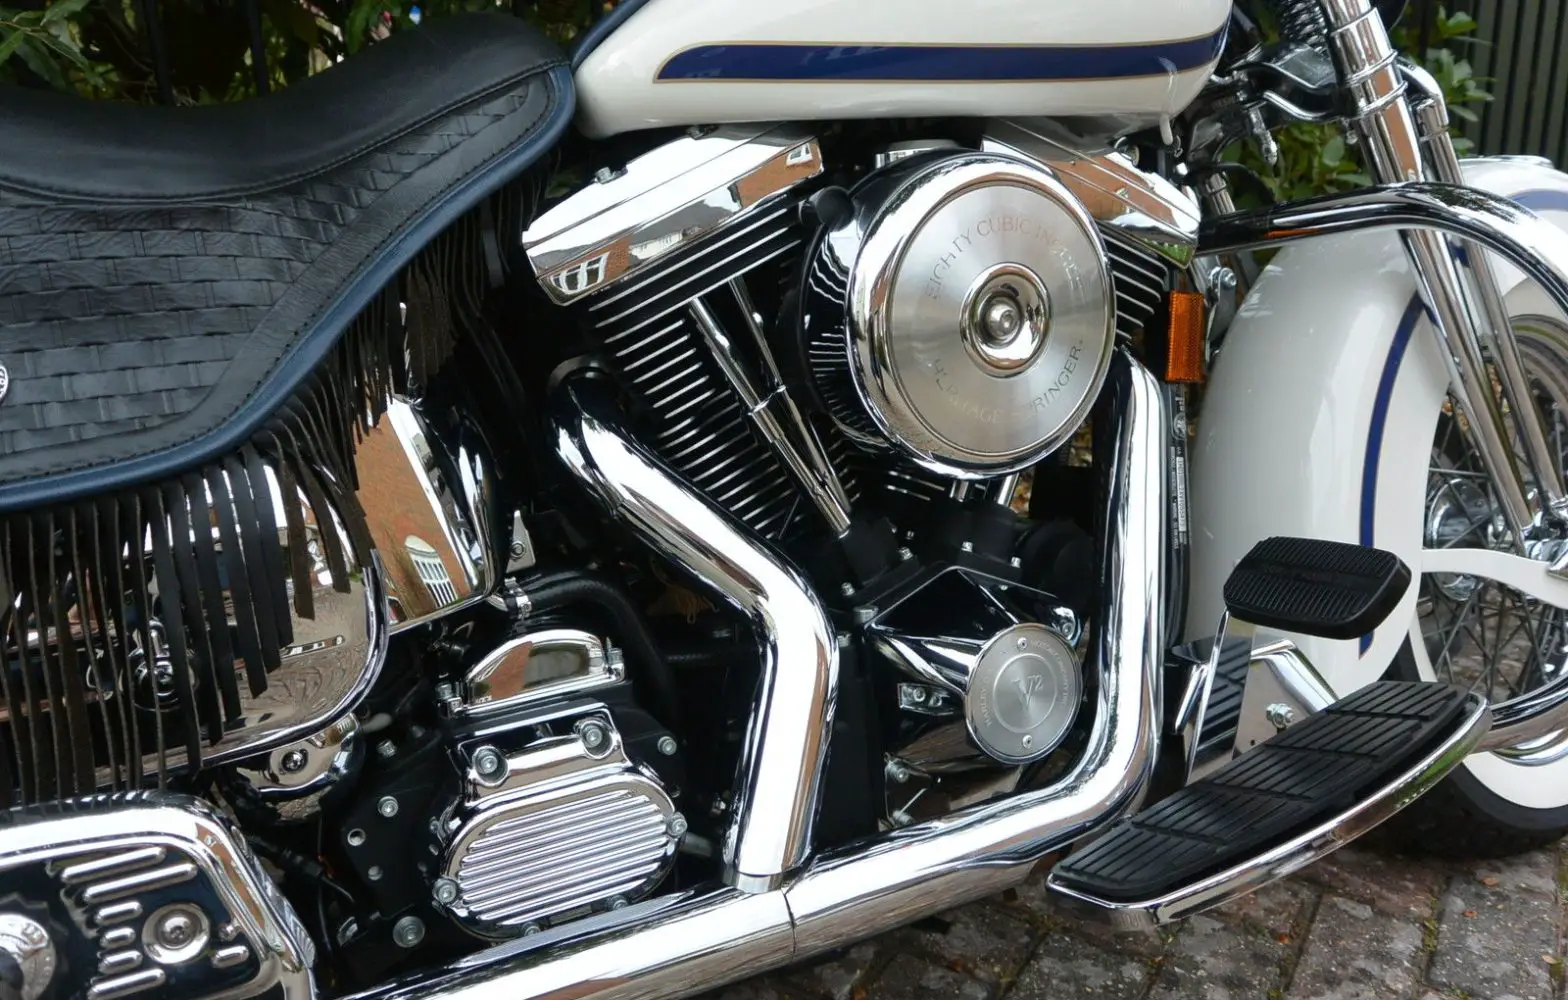 Harley Davidson Evolution Engine Problems What You Need To Know Backyardrider Com